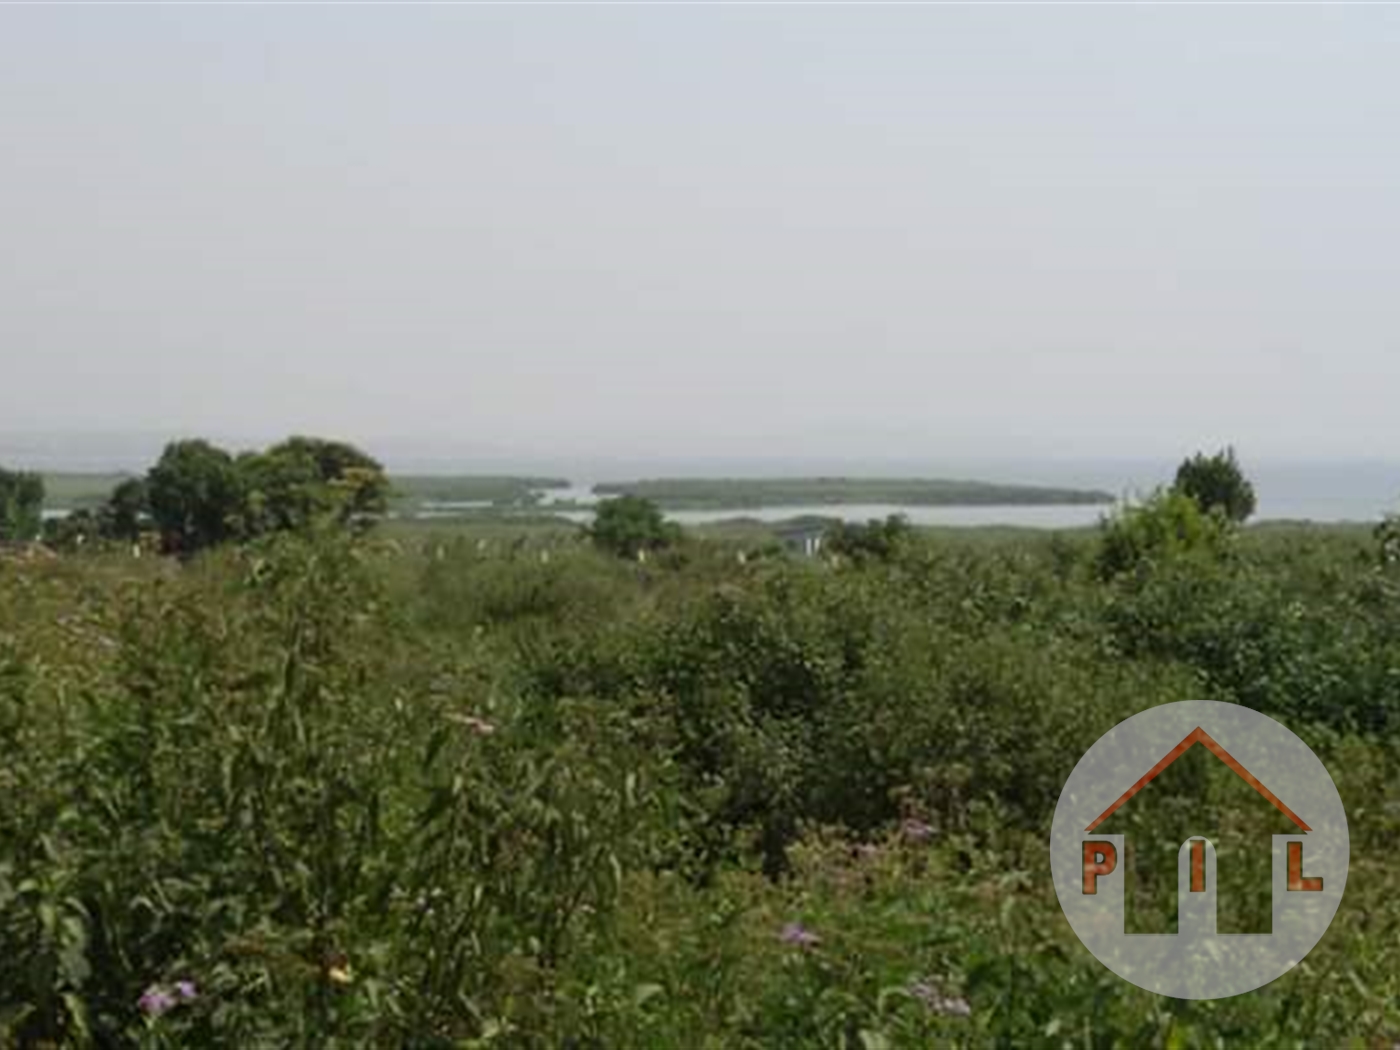 Multipurpose Land for sale in Nakasongola Nakasongola